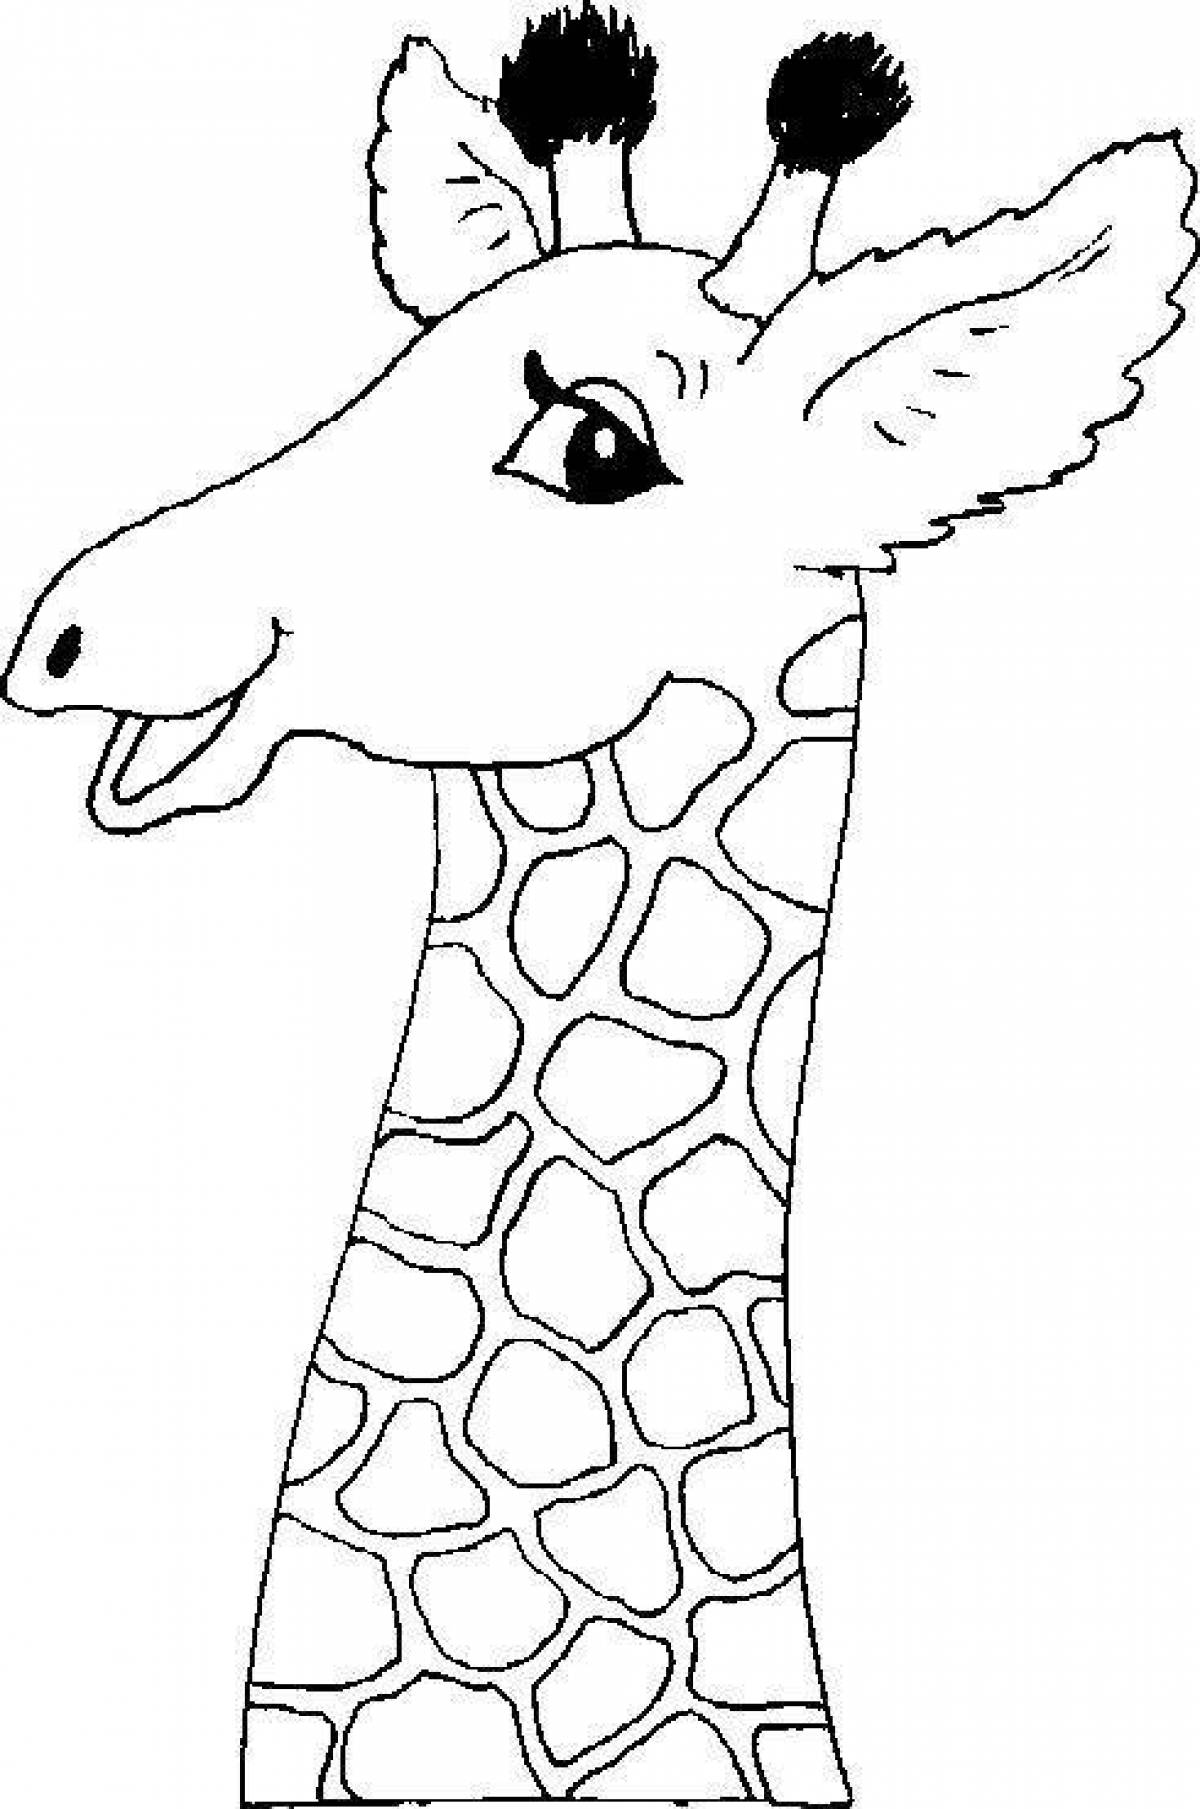 Coloring peaceful giraffe